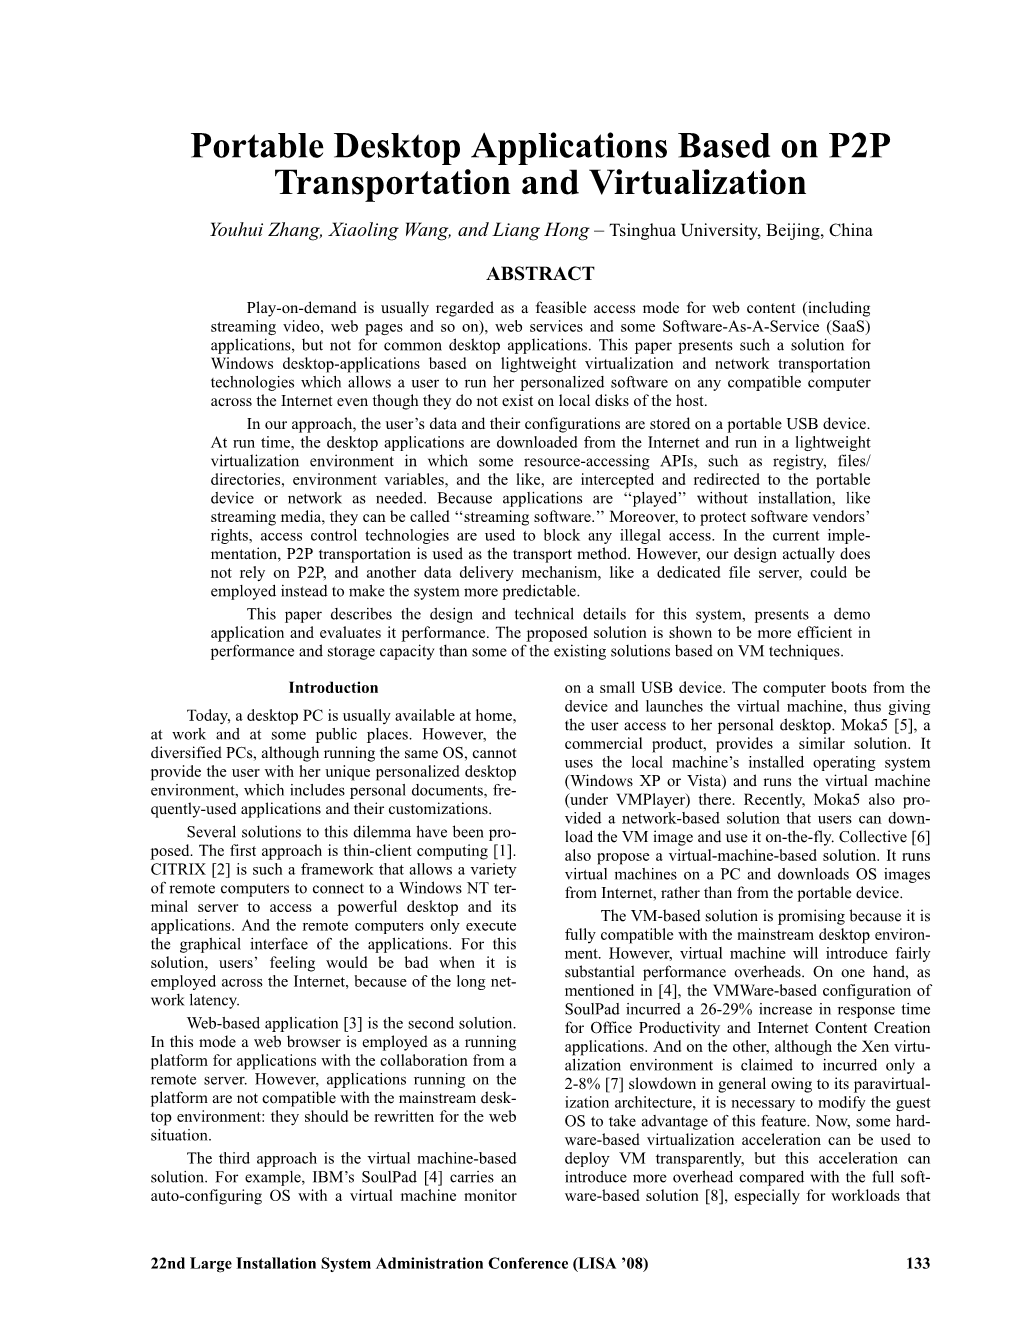 Portable Desktop Applications Based on P2P Transportation and Virtualization